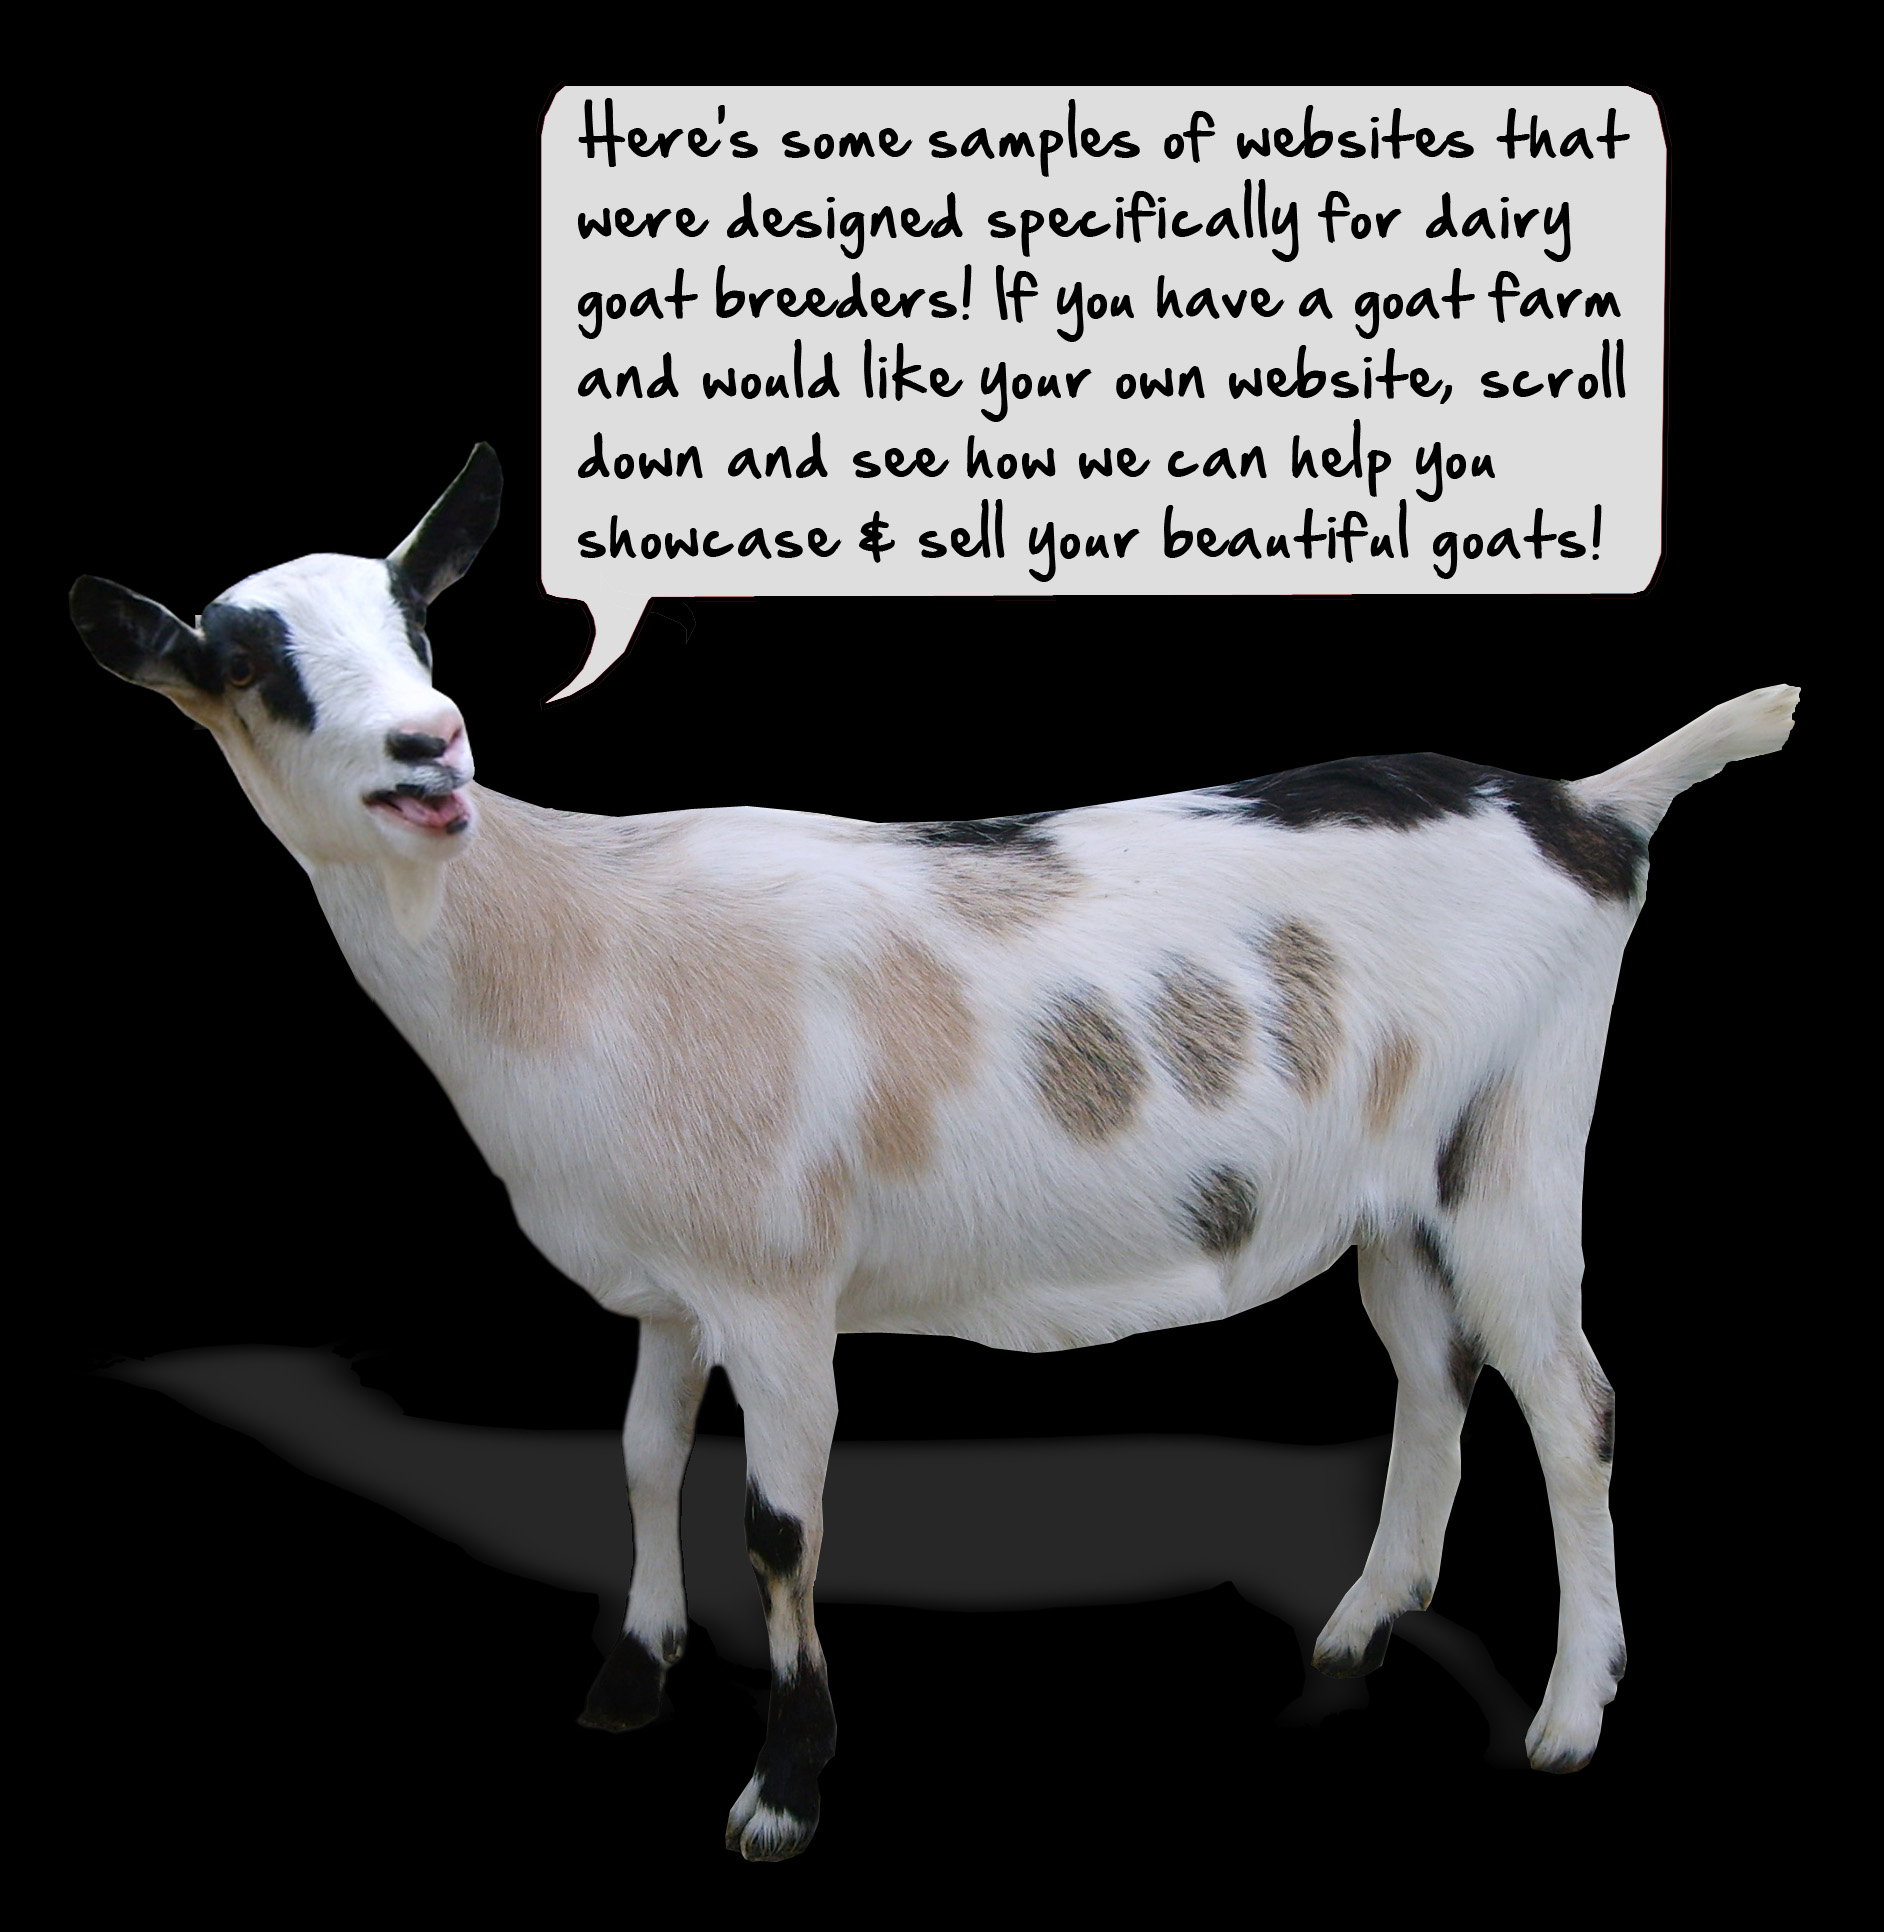 websites for goat breeders